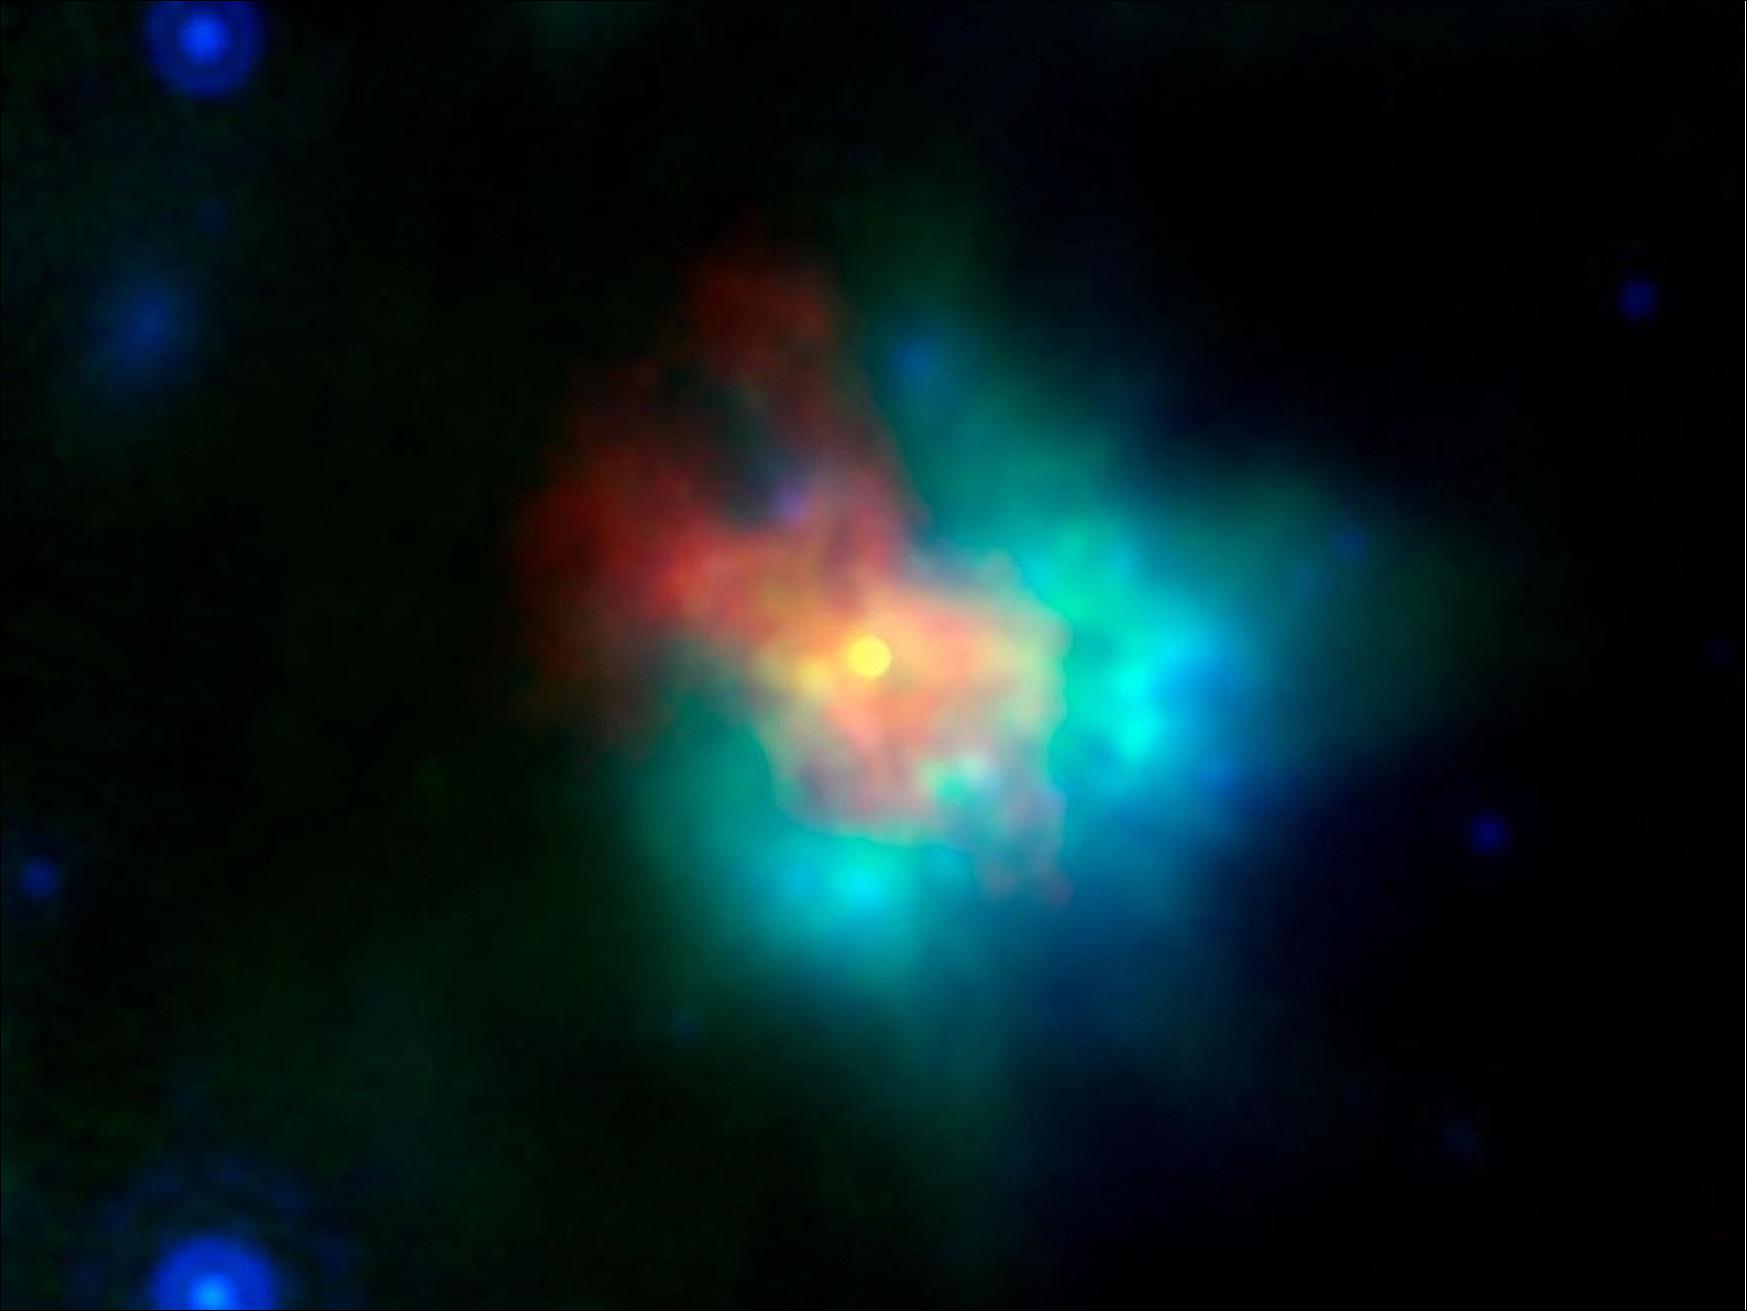 Figure 25: Multi-wavelength view of a supernova remnant (image credit: NASA/JPL-Caltech/CXC/ESA/NRAO/J. Rho (SETI Institute)